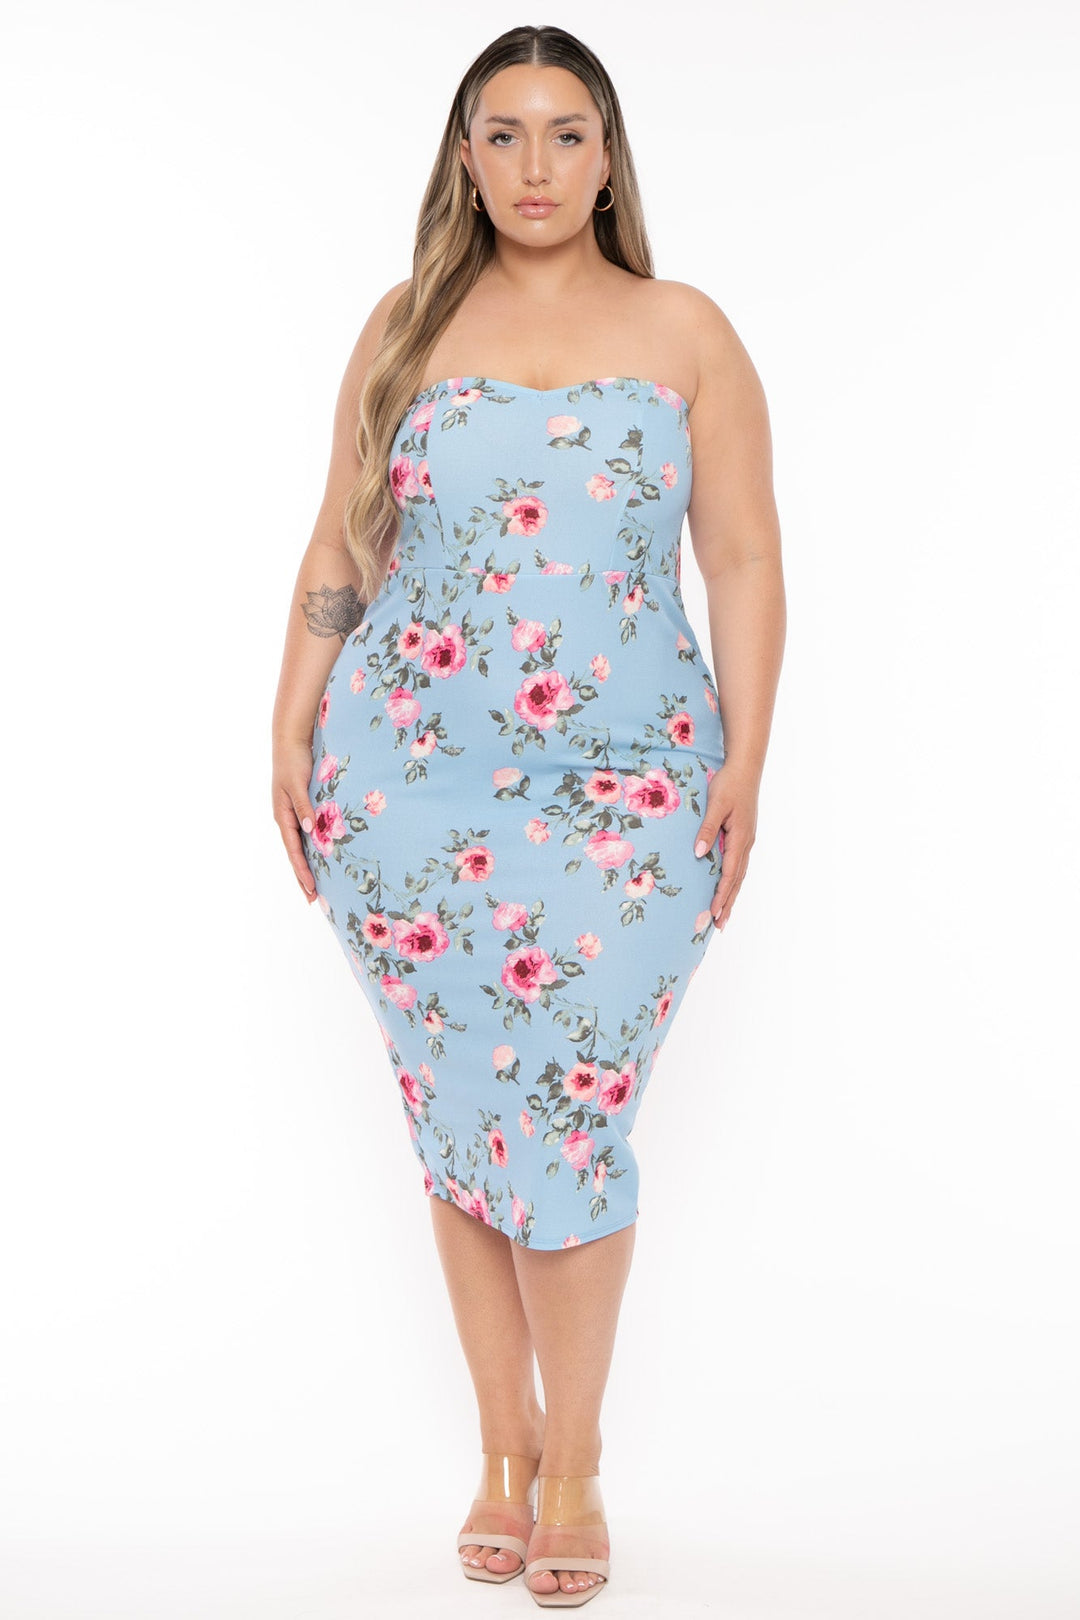 Curvy Sense Dresses Plus Size Bellamy  Bodycon Dress - Blue